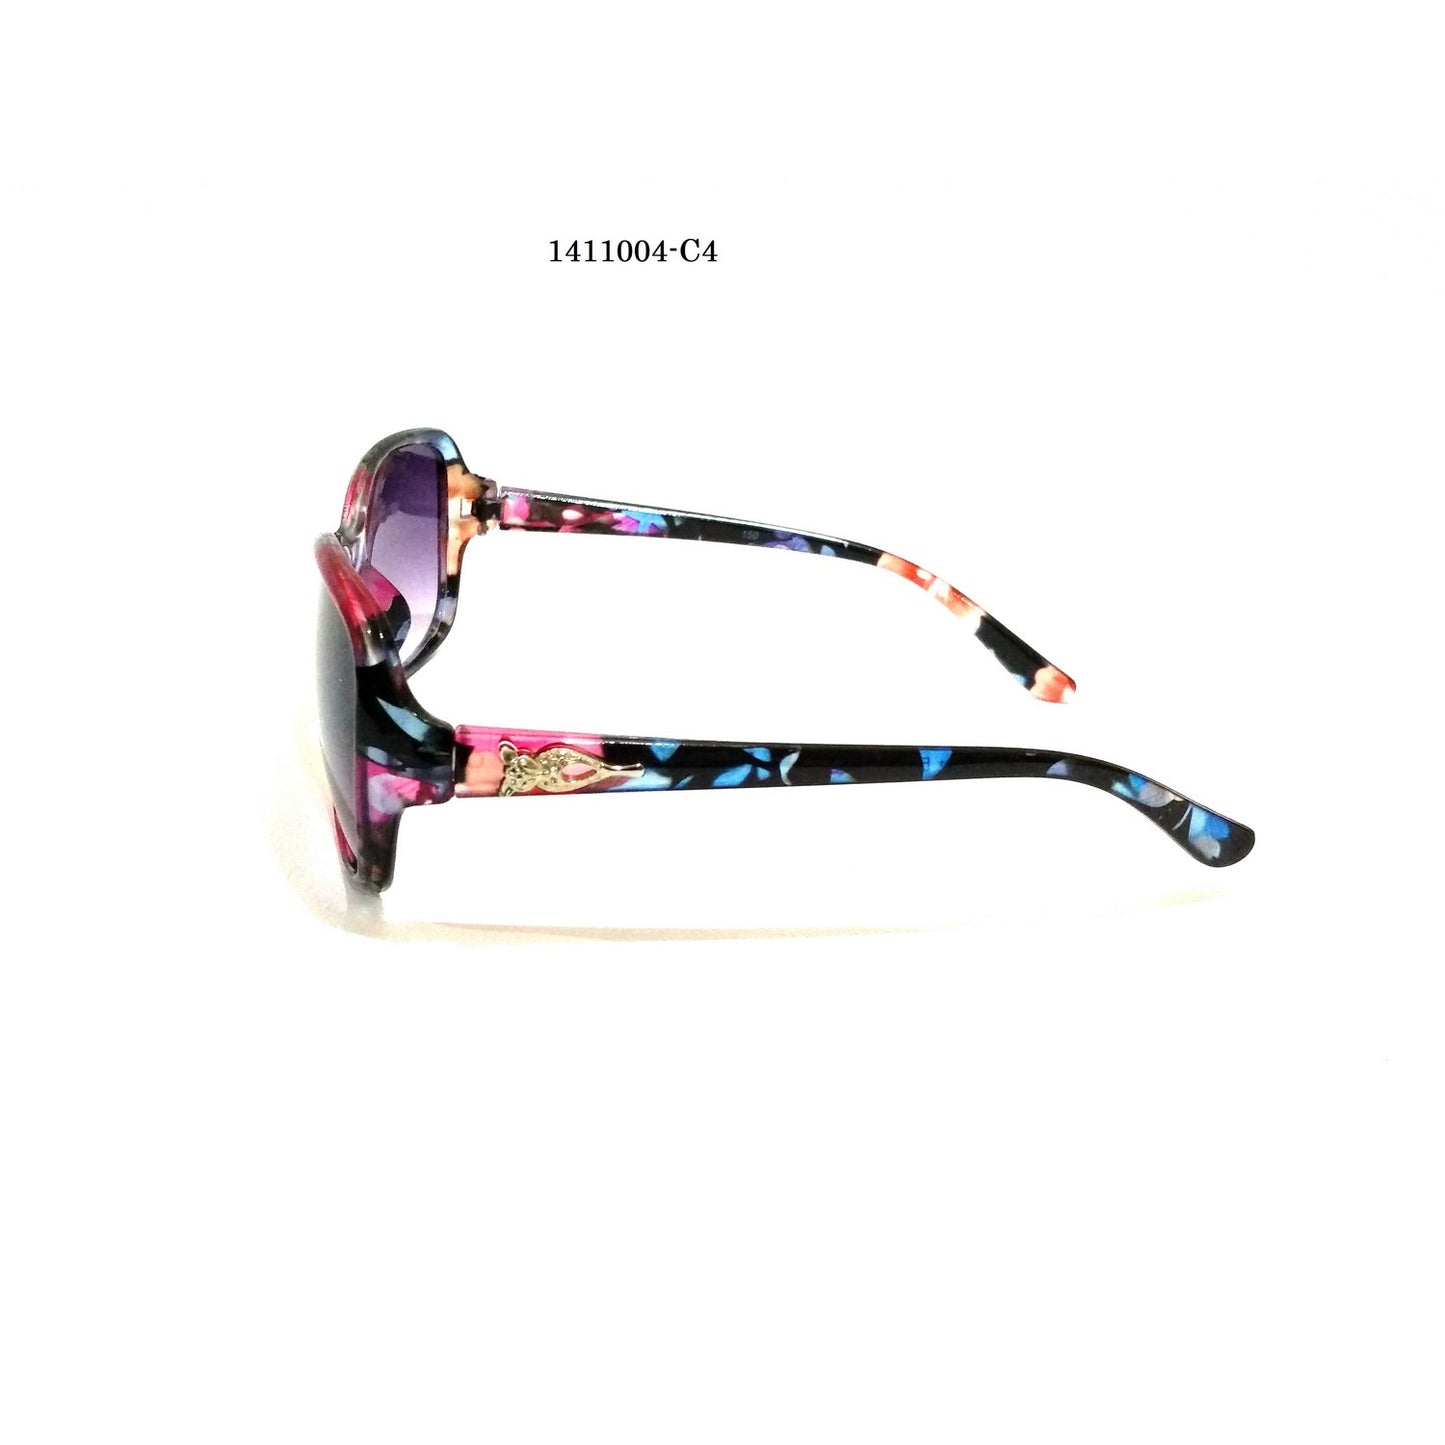 Floral Print Ladies Sunglasses for Women Model 1141004C4 - Glasses India Online